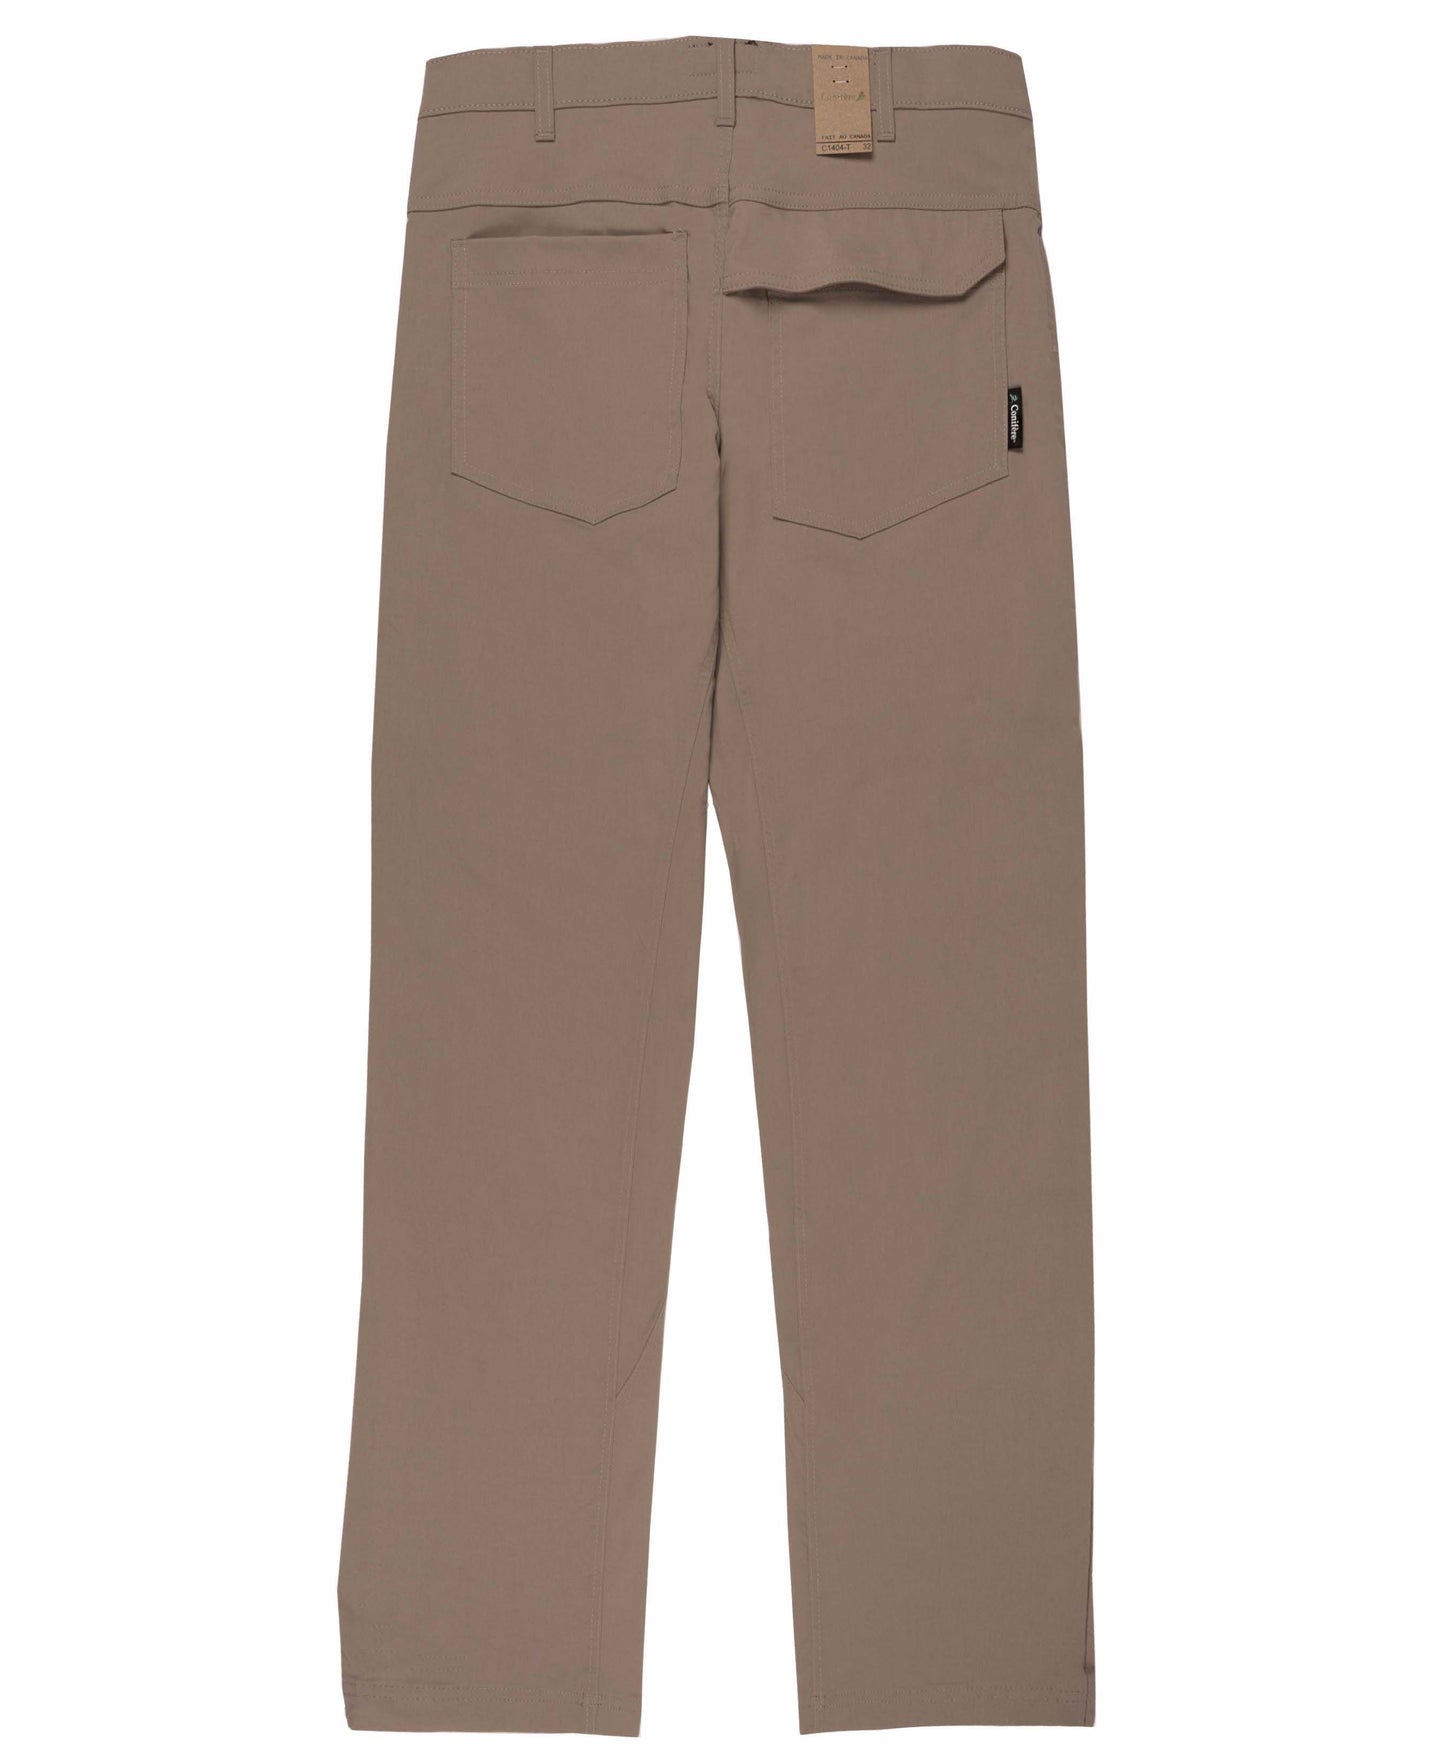 Plein Air Pantalon Beige - Outdoor Beige Pants